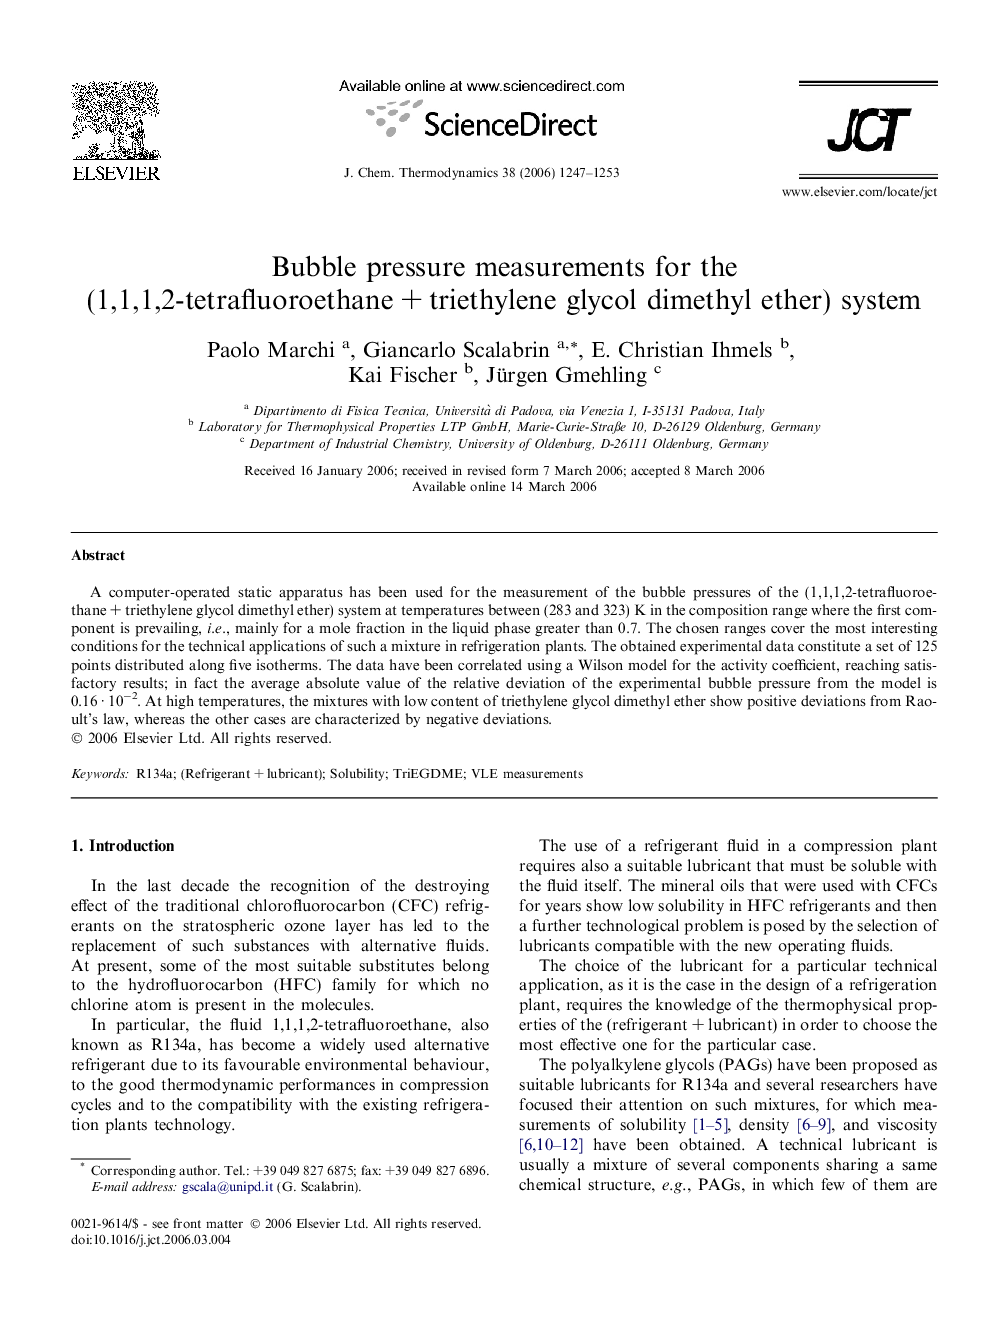 Bubble pressure measurements for the (1,1,1,2-tetrafluoroethane + triethylene glycol dimethyl ether) system